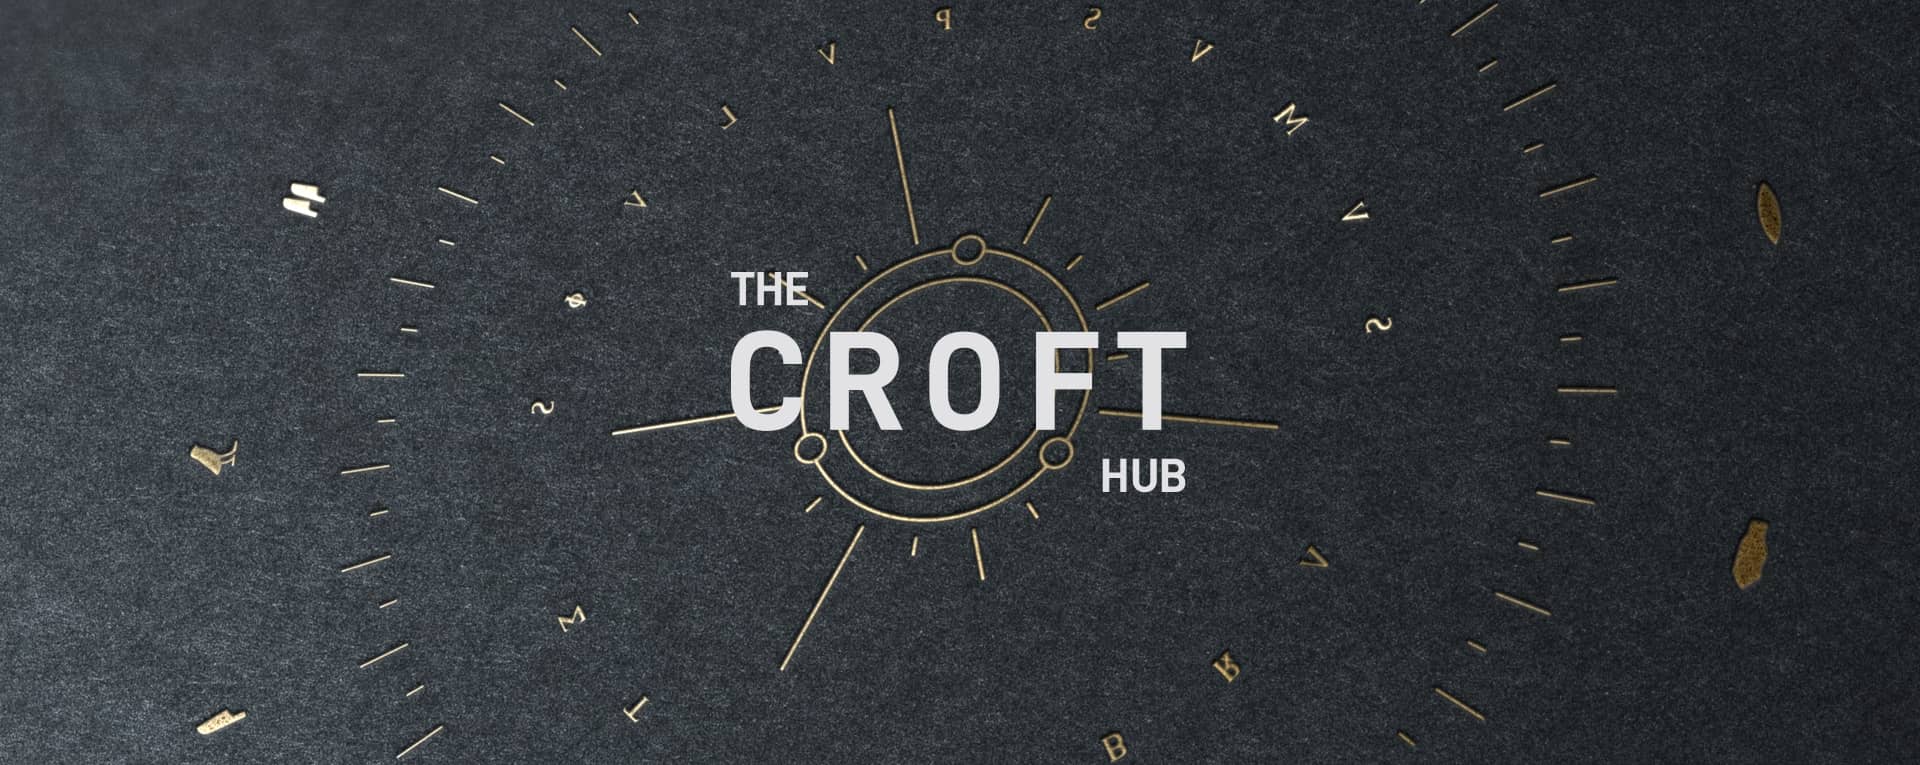 The Croft Hub